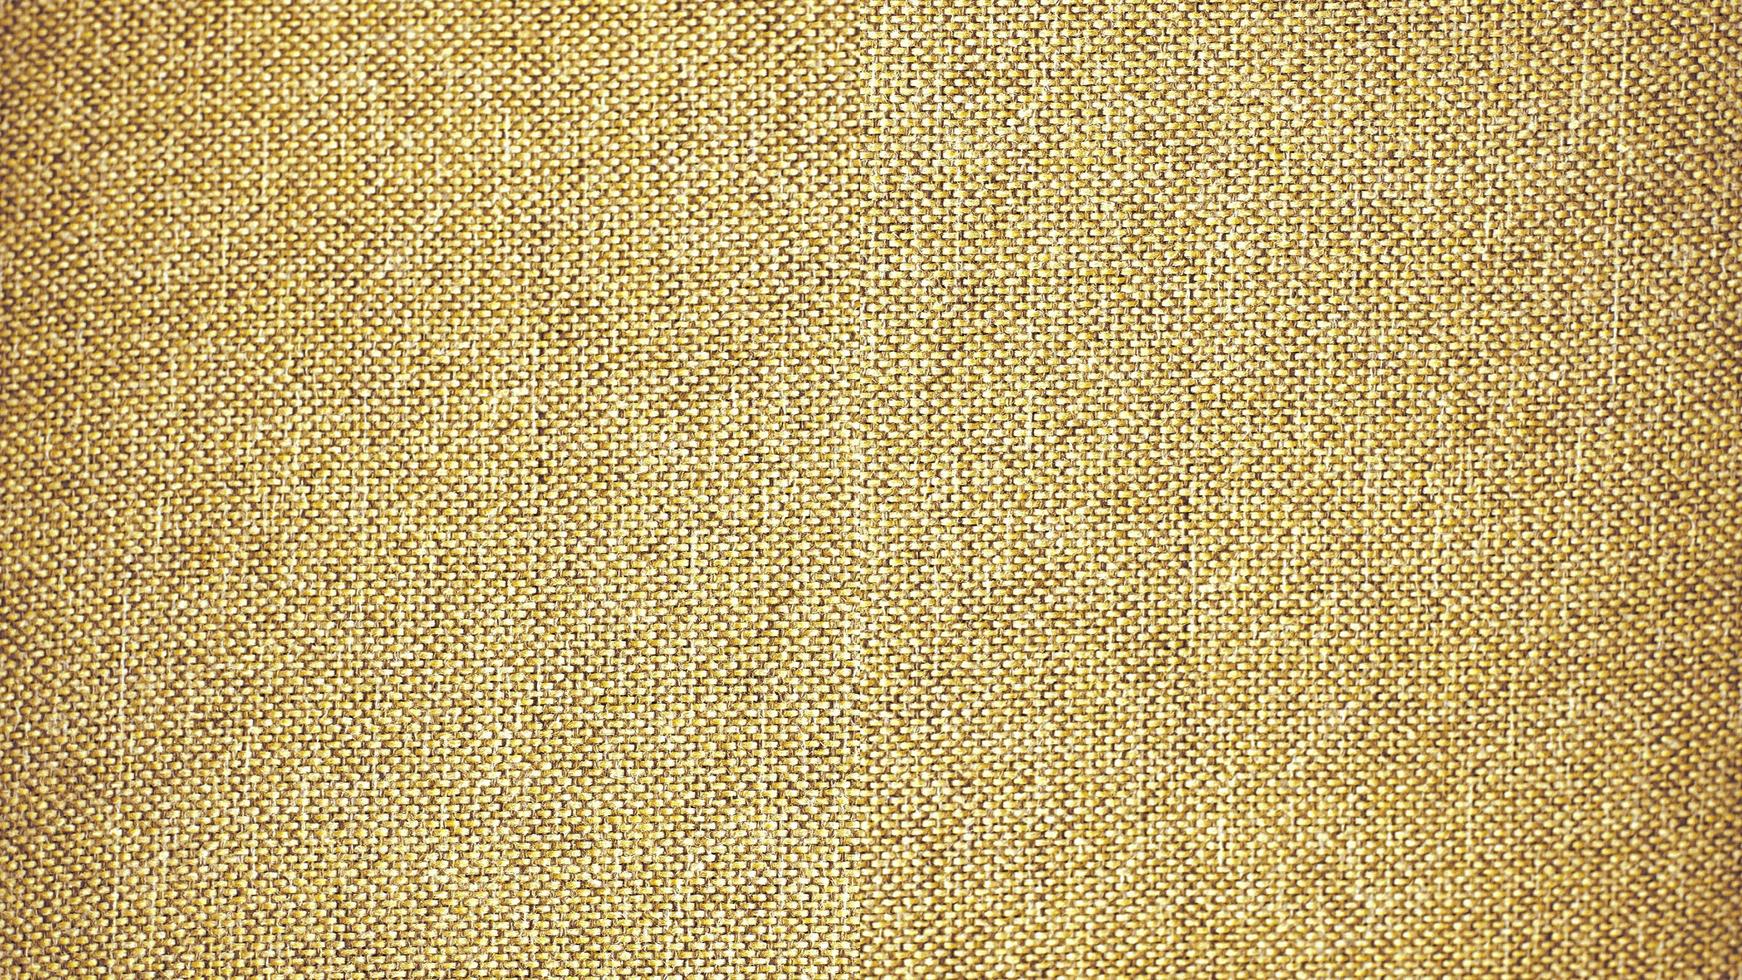 Cotton fabric wallpaper texture pattern background photo